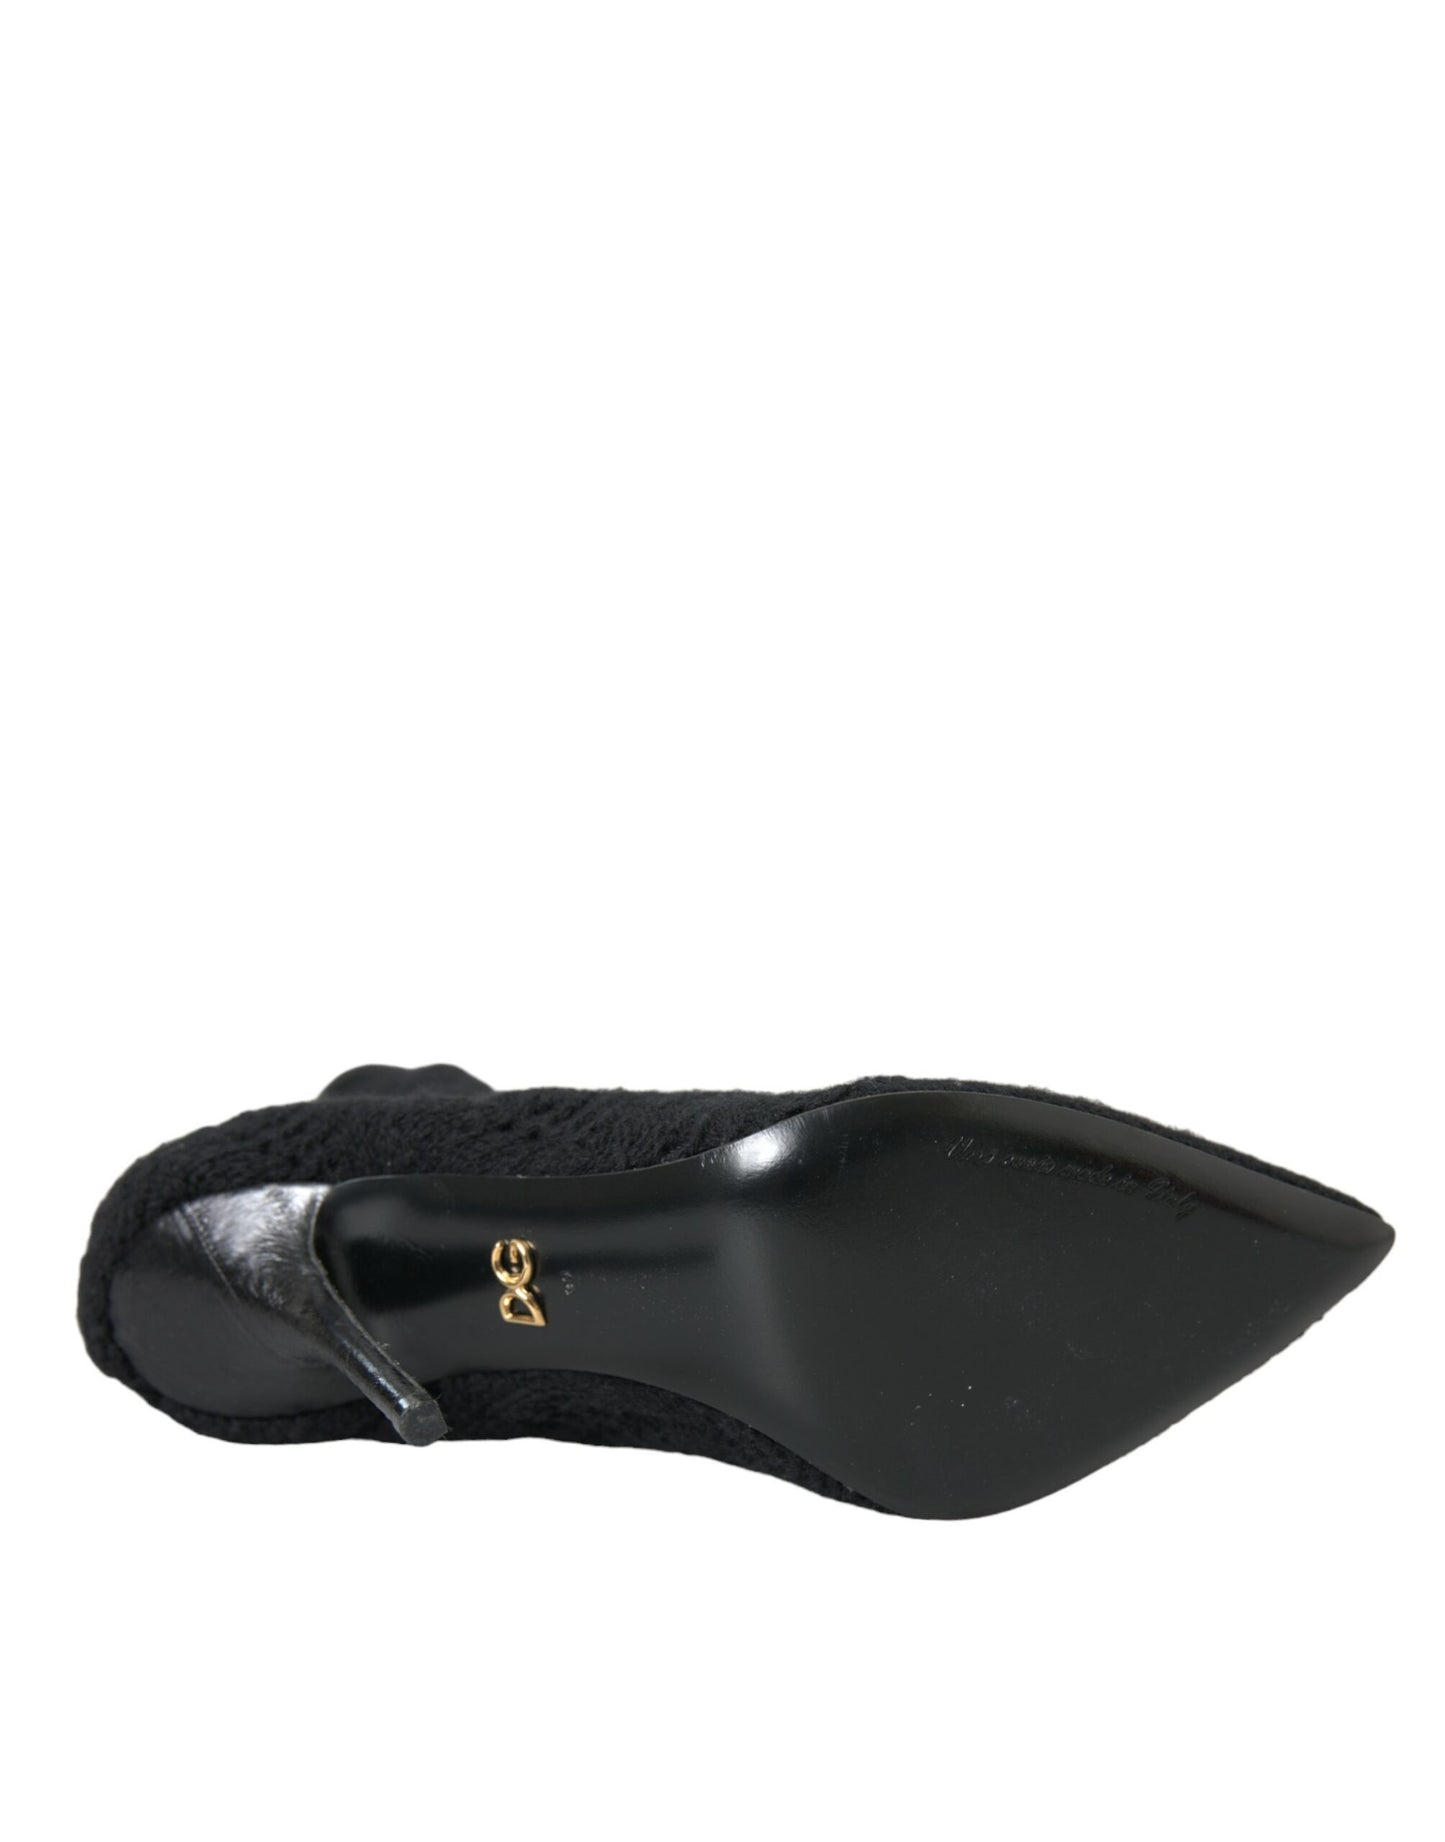 Dolce & Gabbana Black Stiletto Heels Mid Calf Boots Shoes